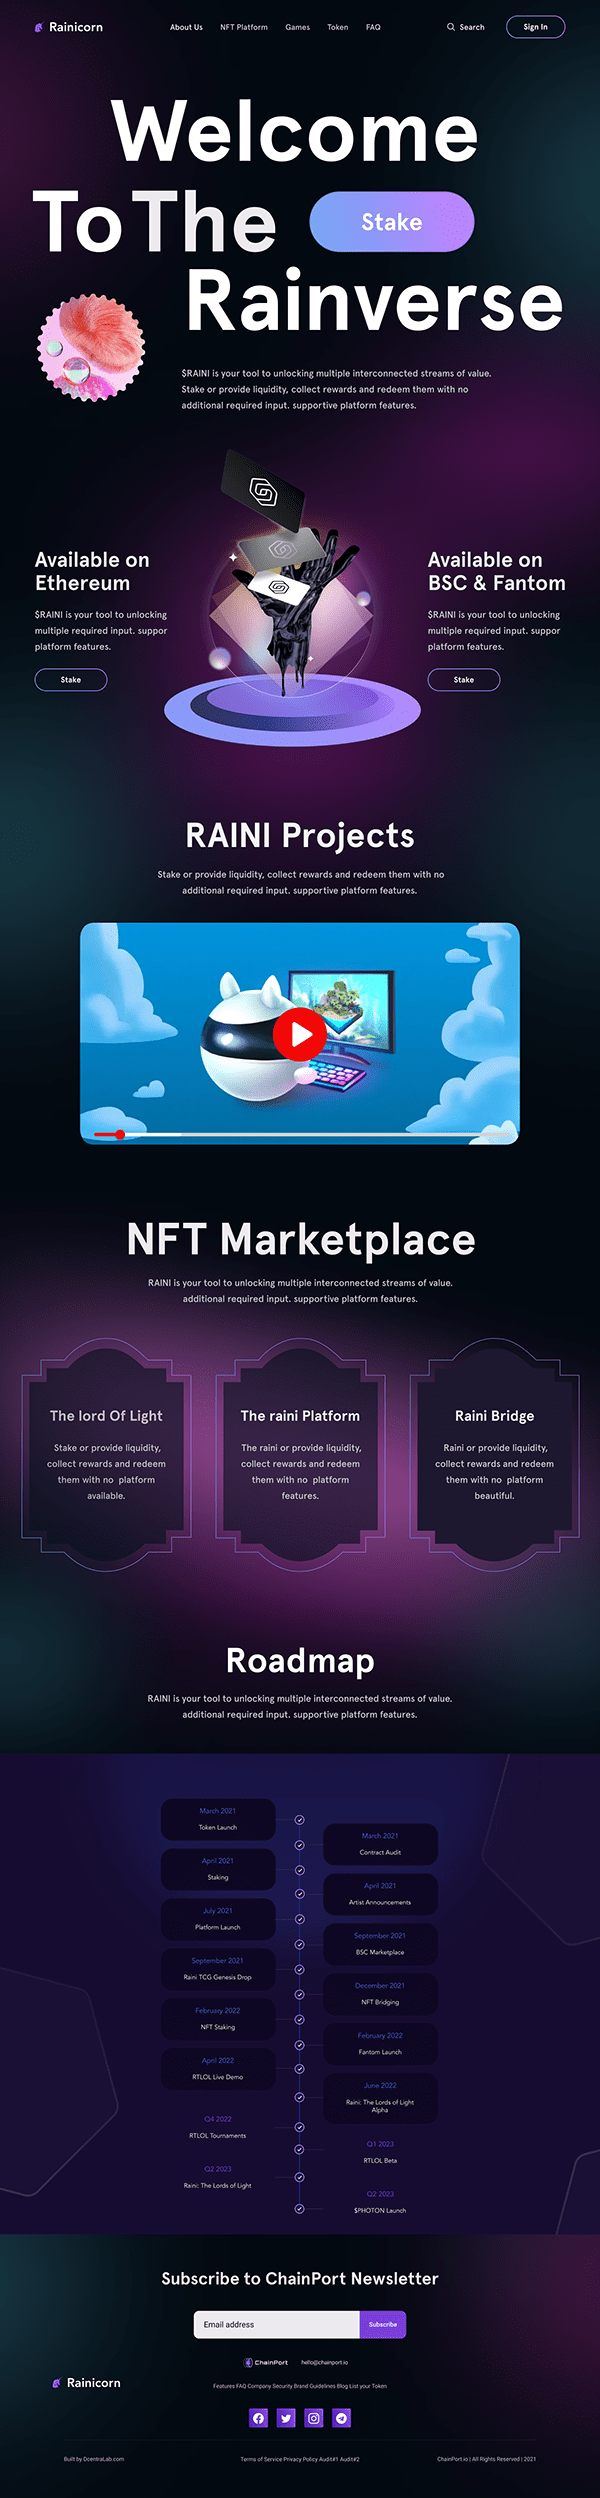 NFT Landing Page